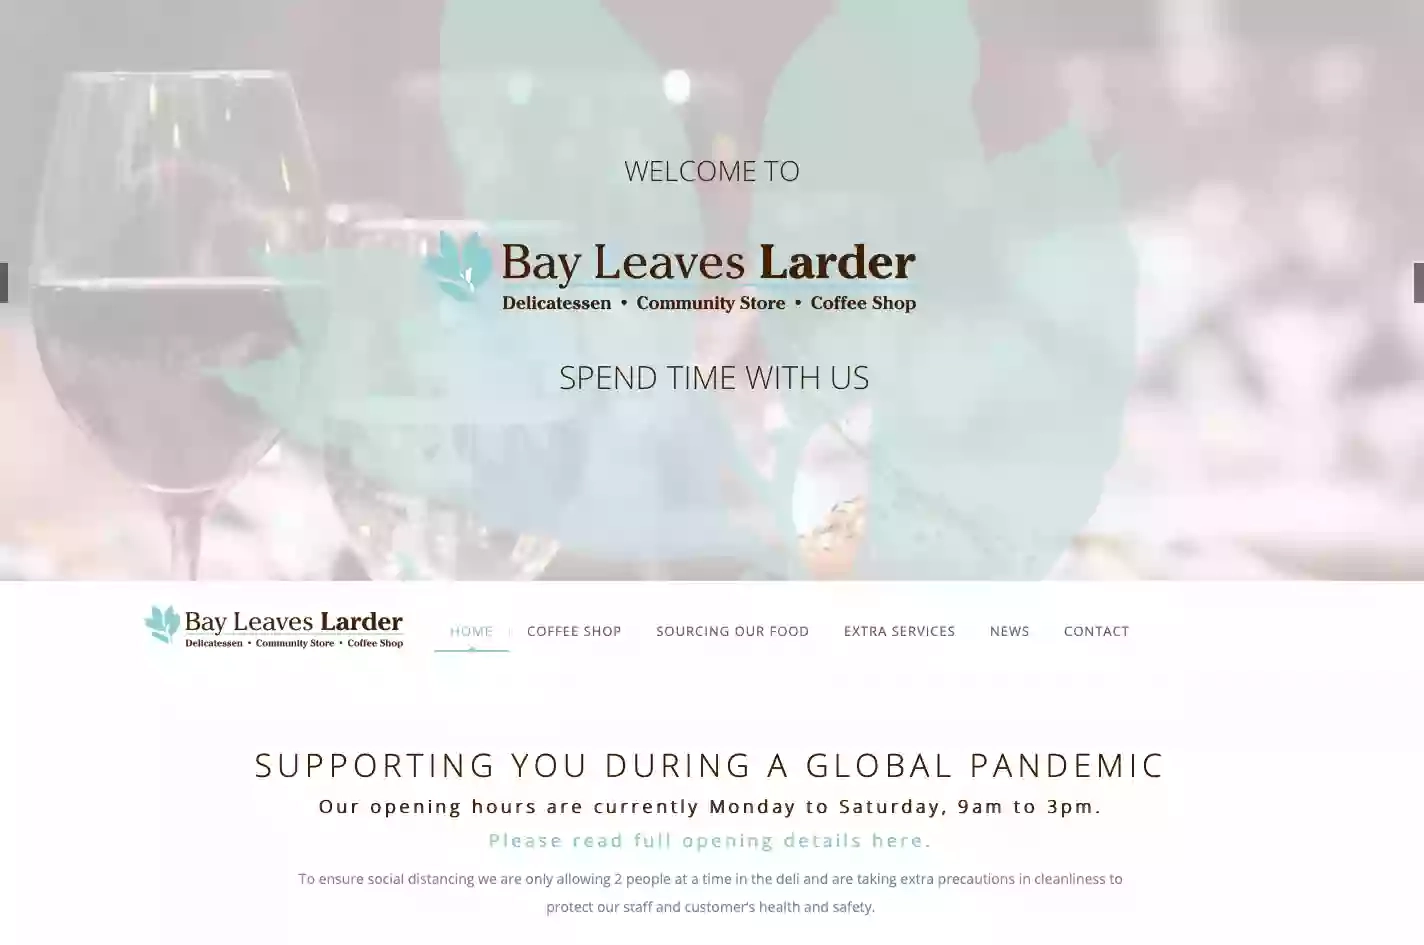 Bay Leaves Larder